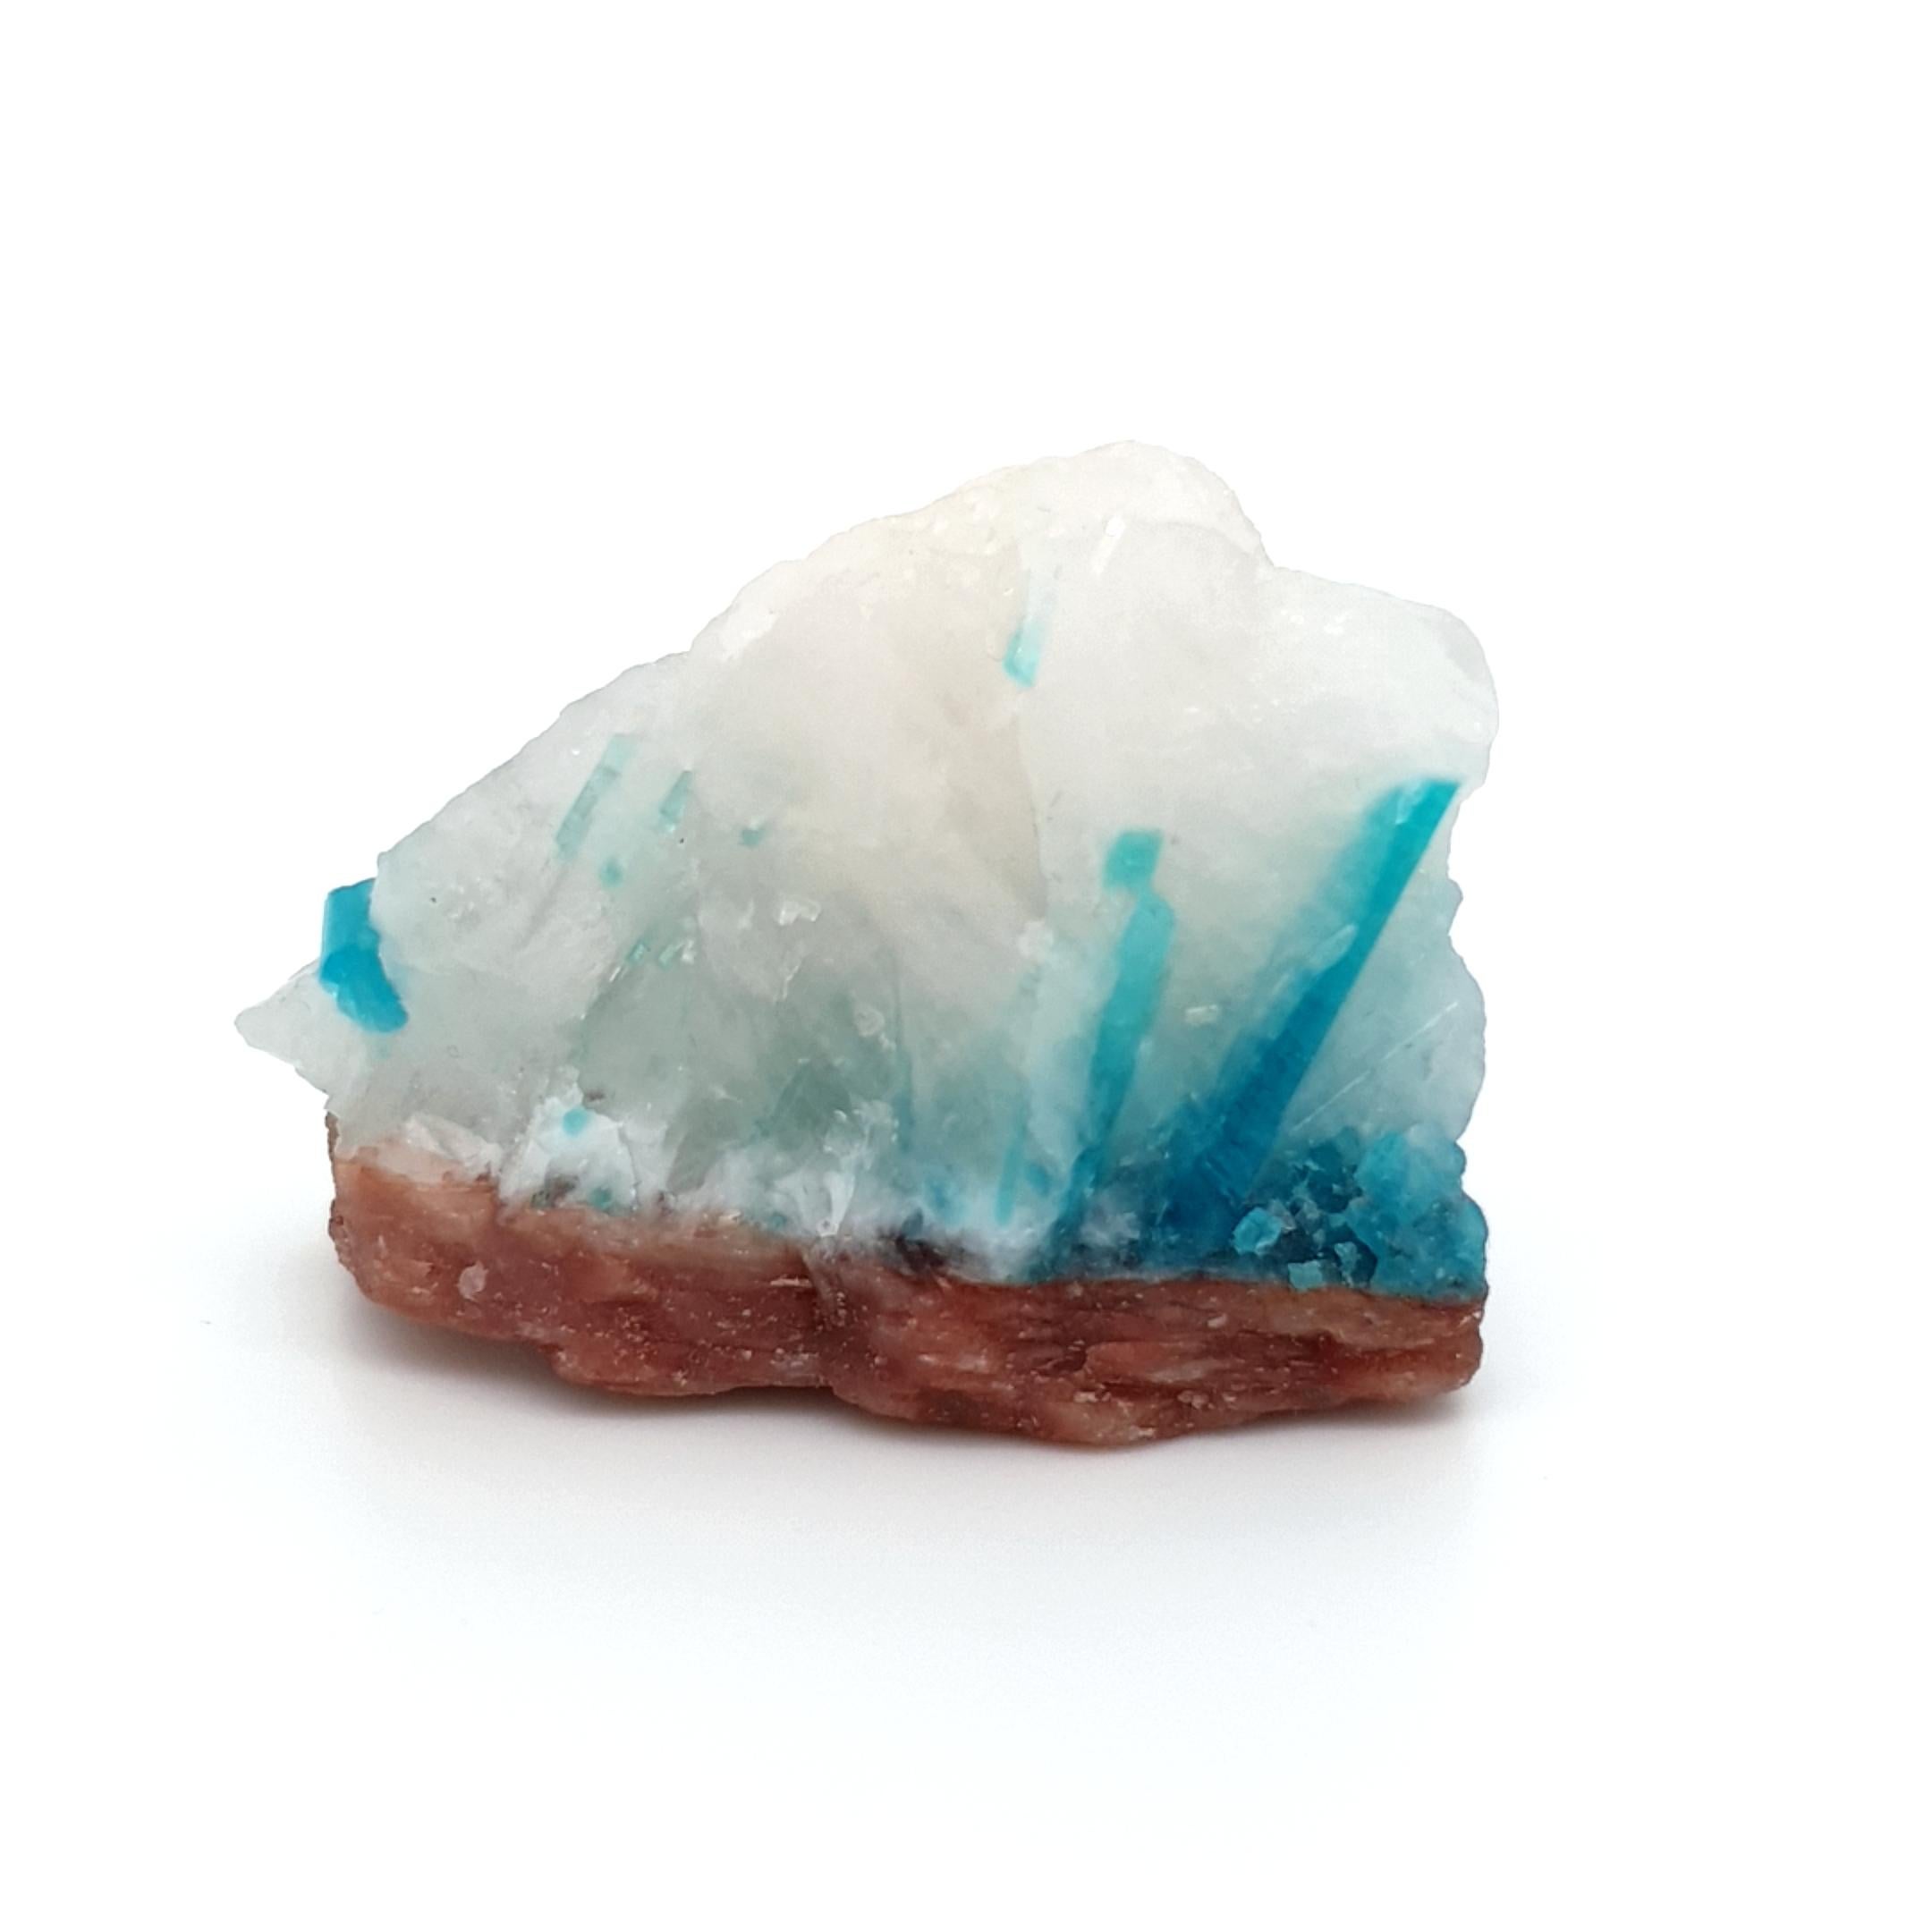 Uncut Paraiba Tourmaline Crystal in Matrix, Mineral Specimen